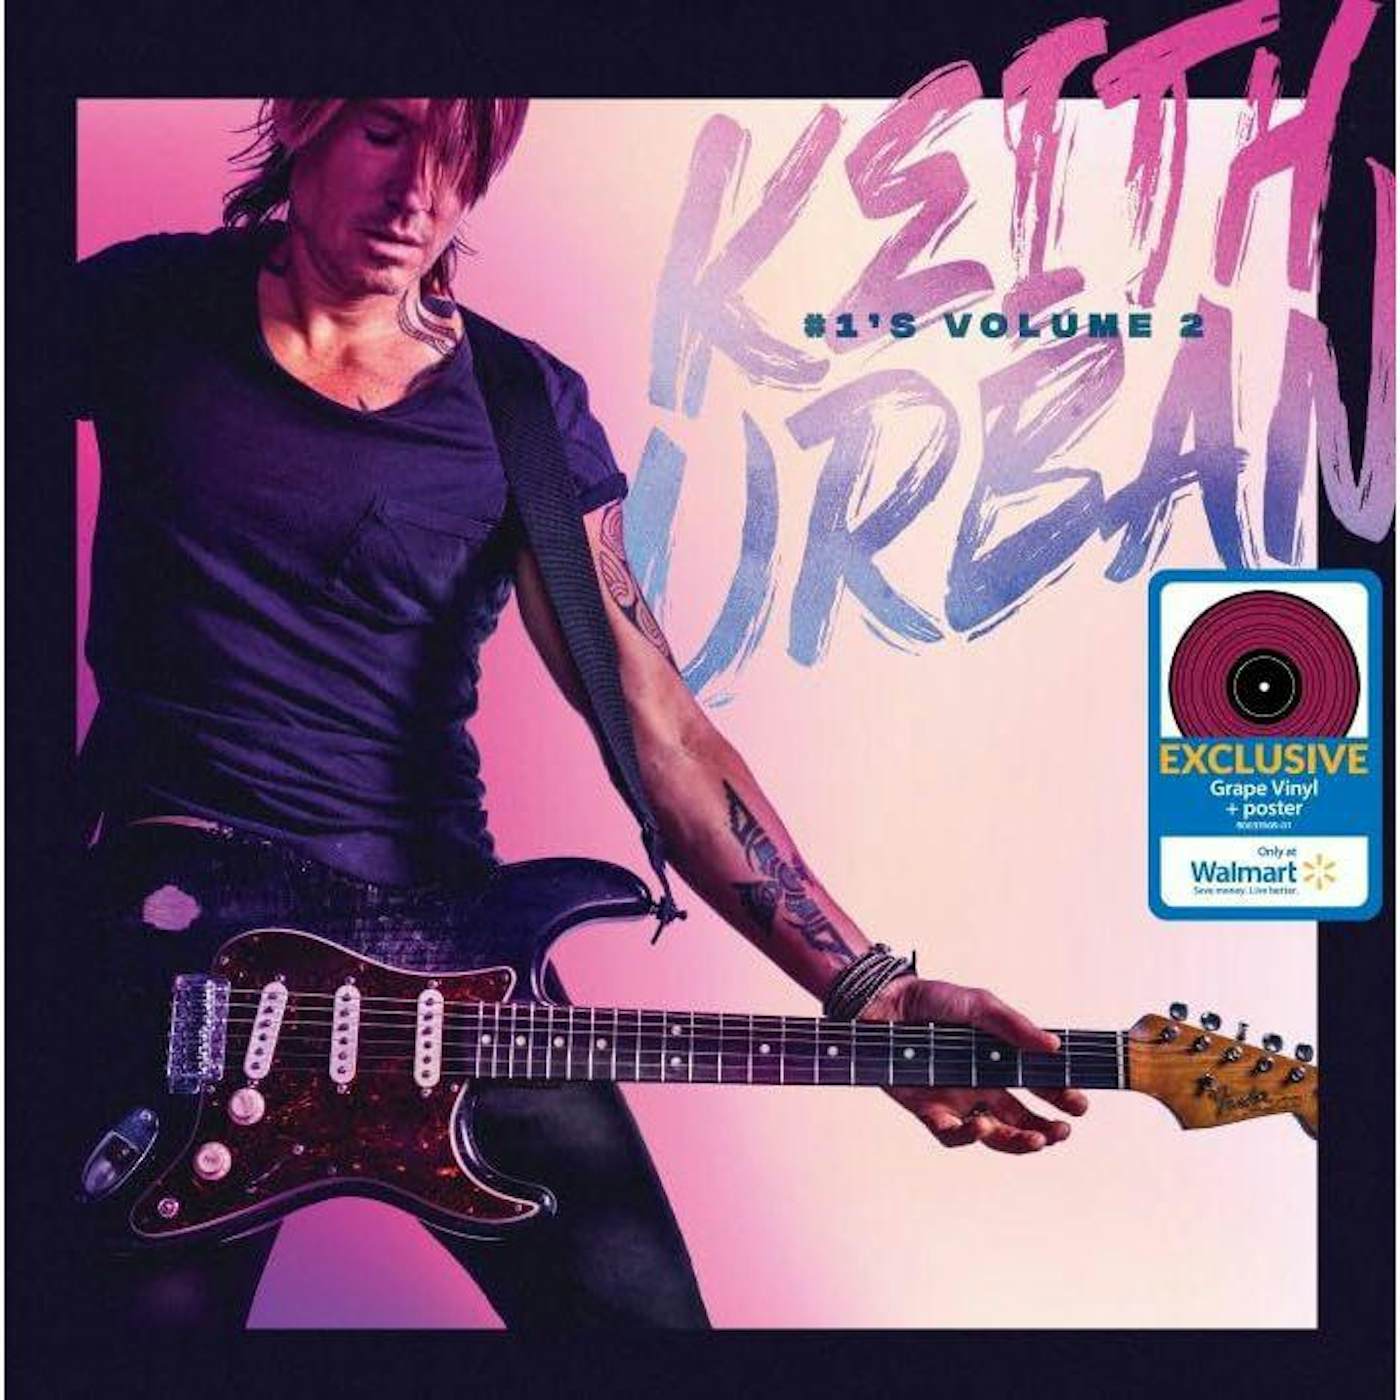 Keith Urban #1's Volume 2 Vinyl Record